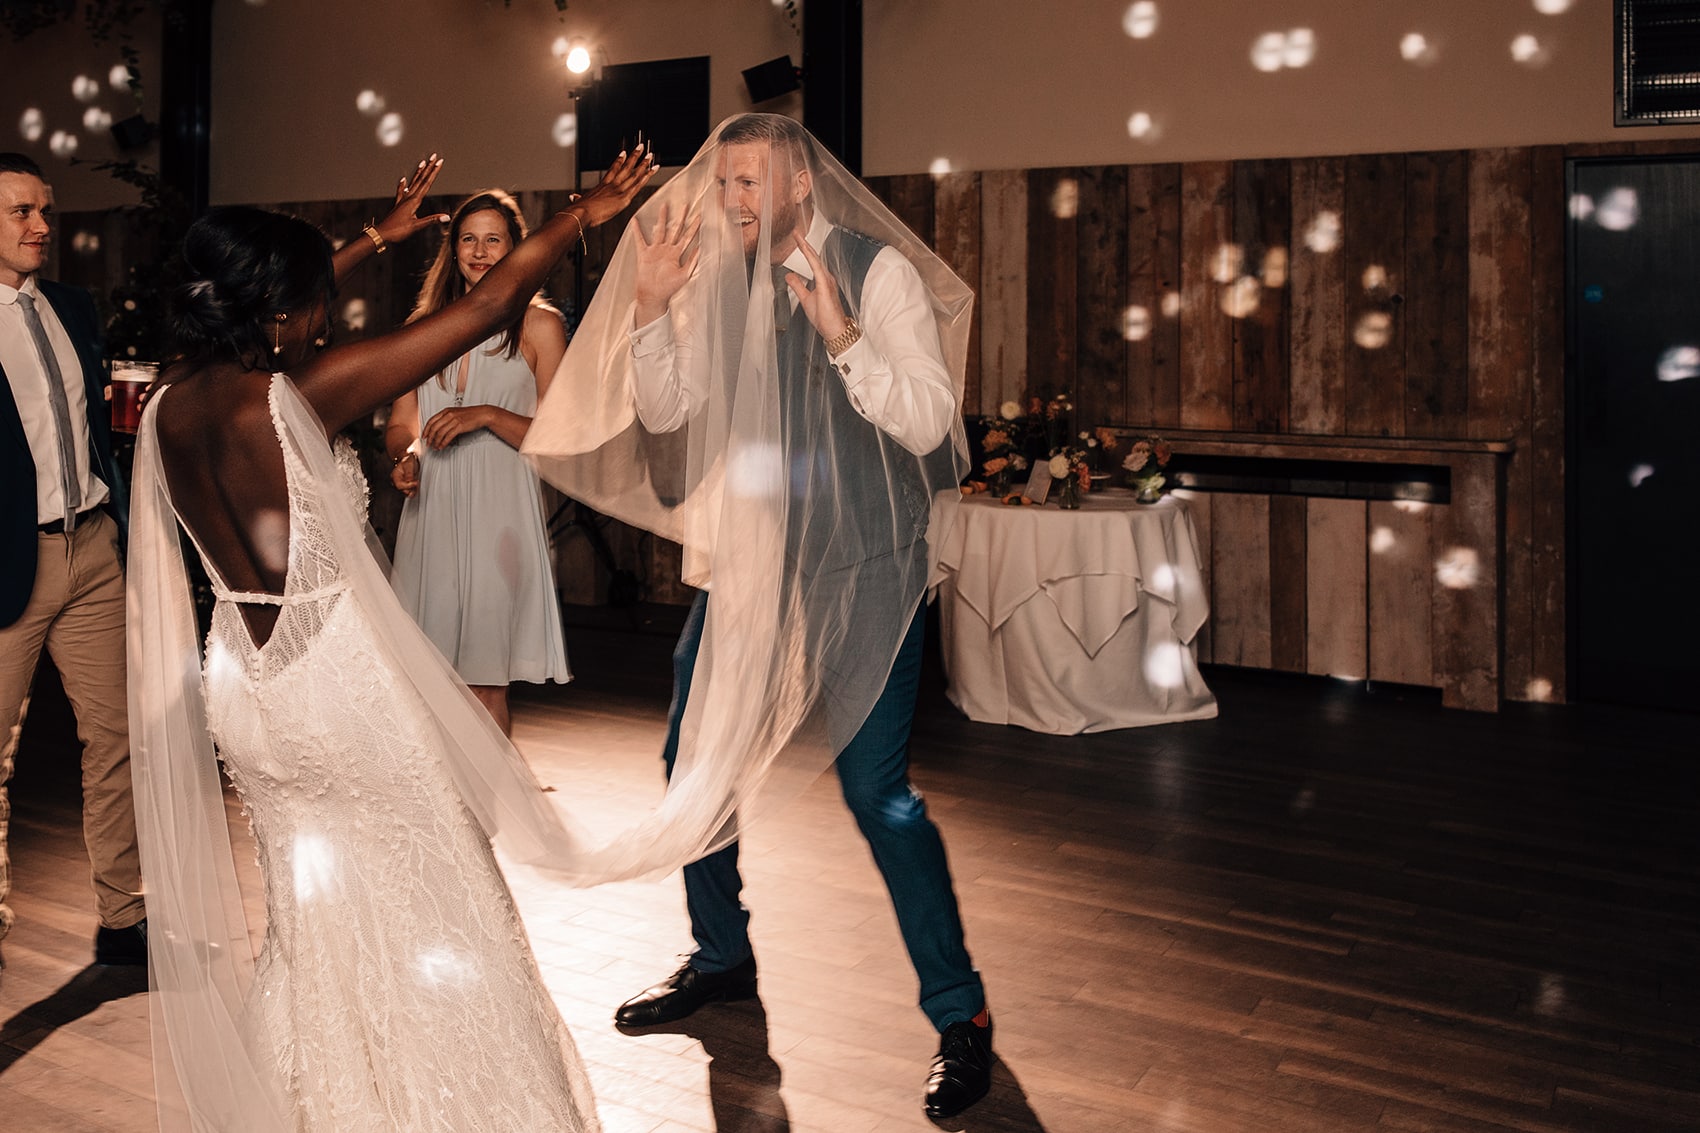 wedding first dance documentary photography